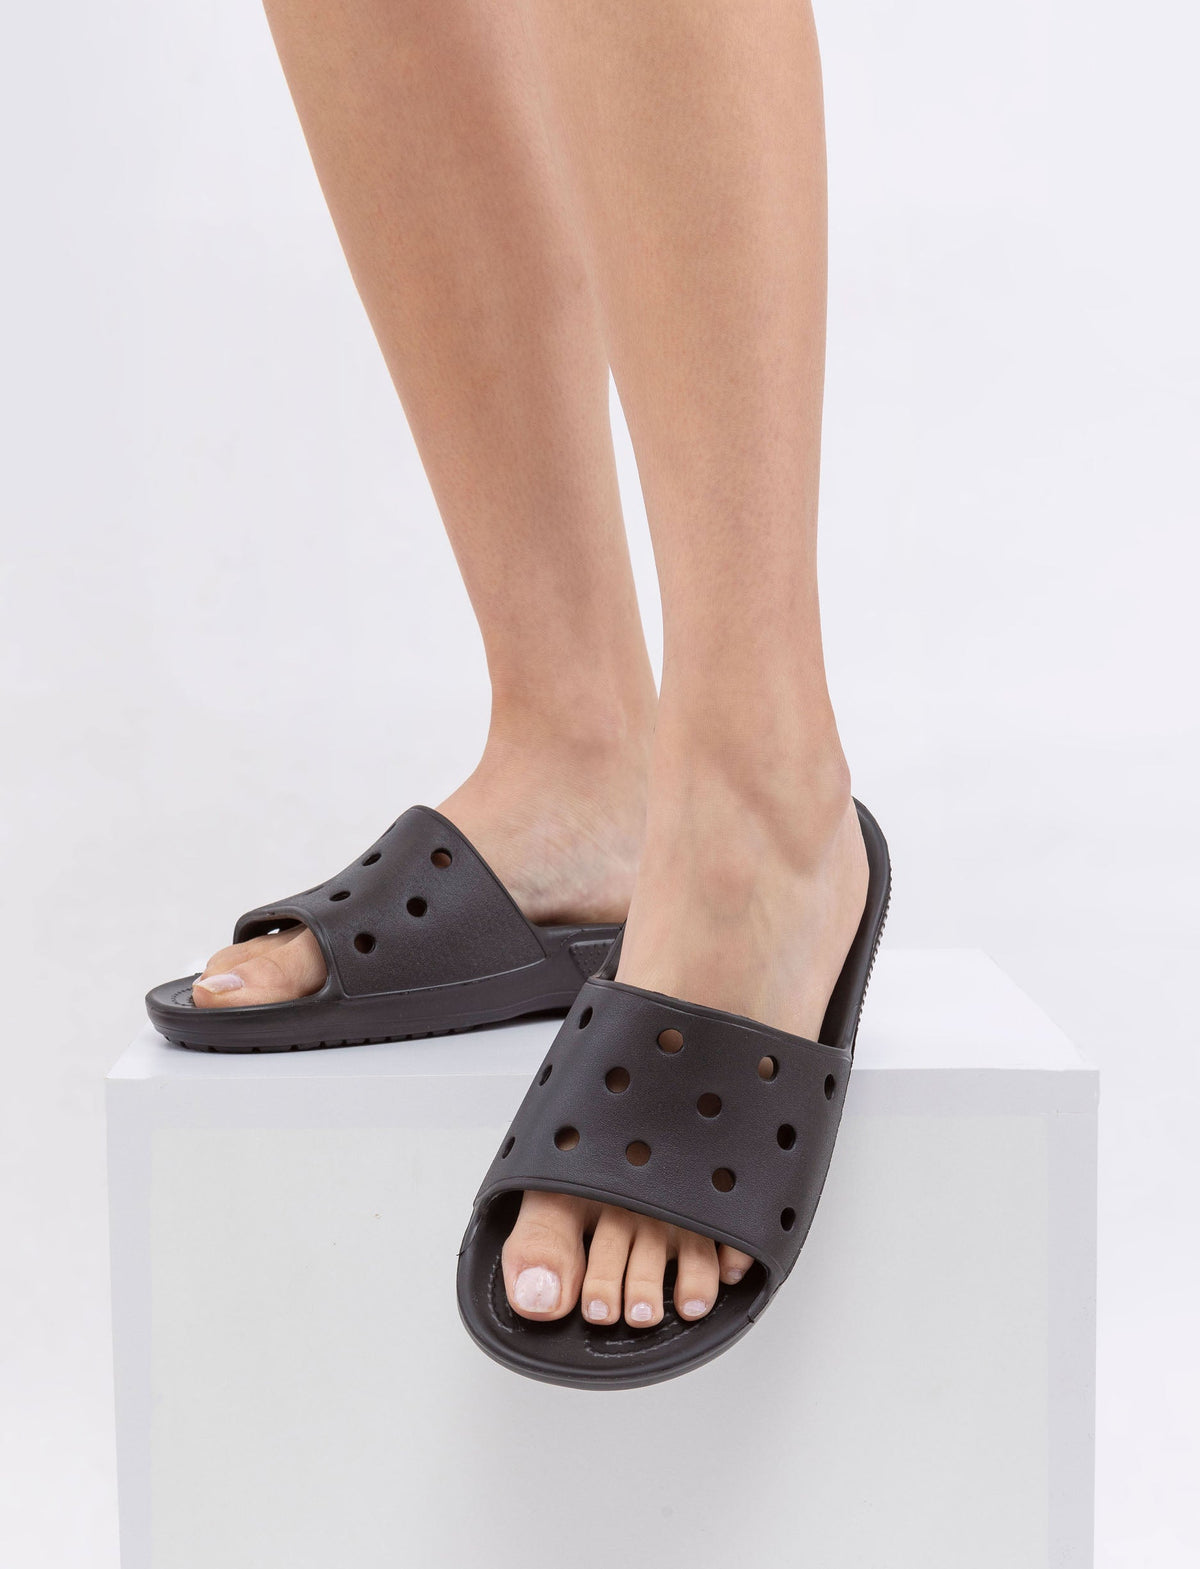 Crocs Classic Crocs Slide -כפכפי סלייד קרוקס בצבע שחור-Crocs-43-44-נאקו